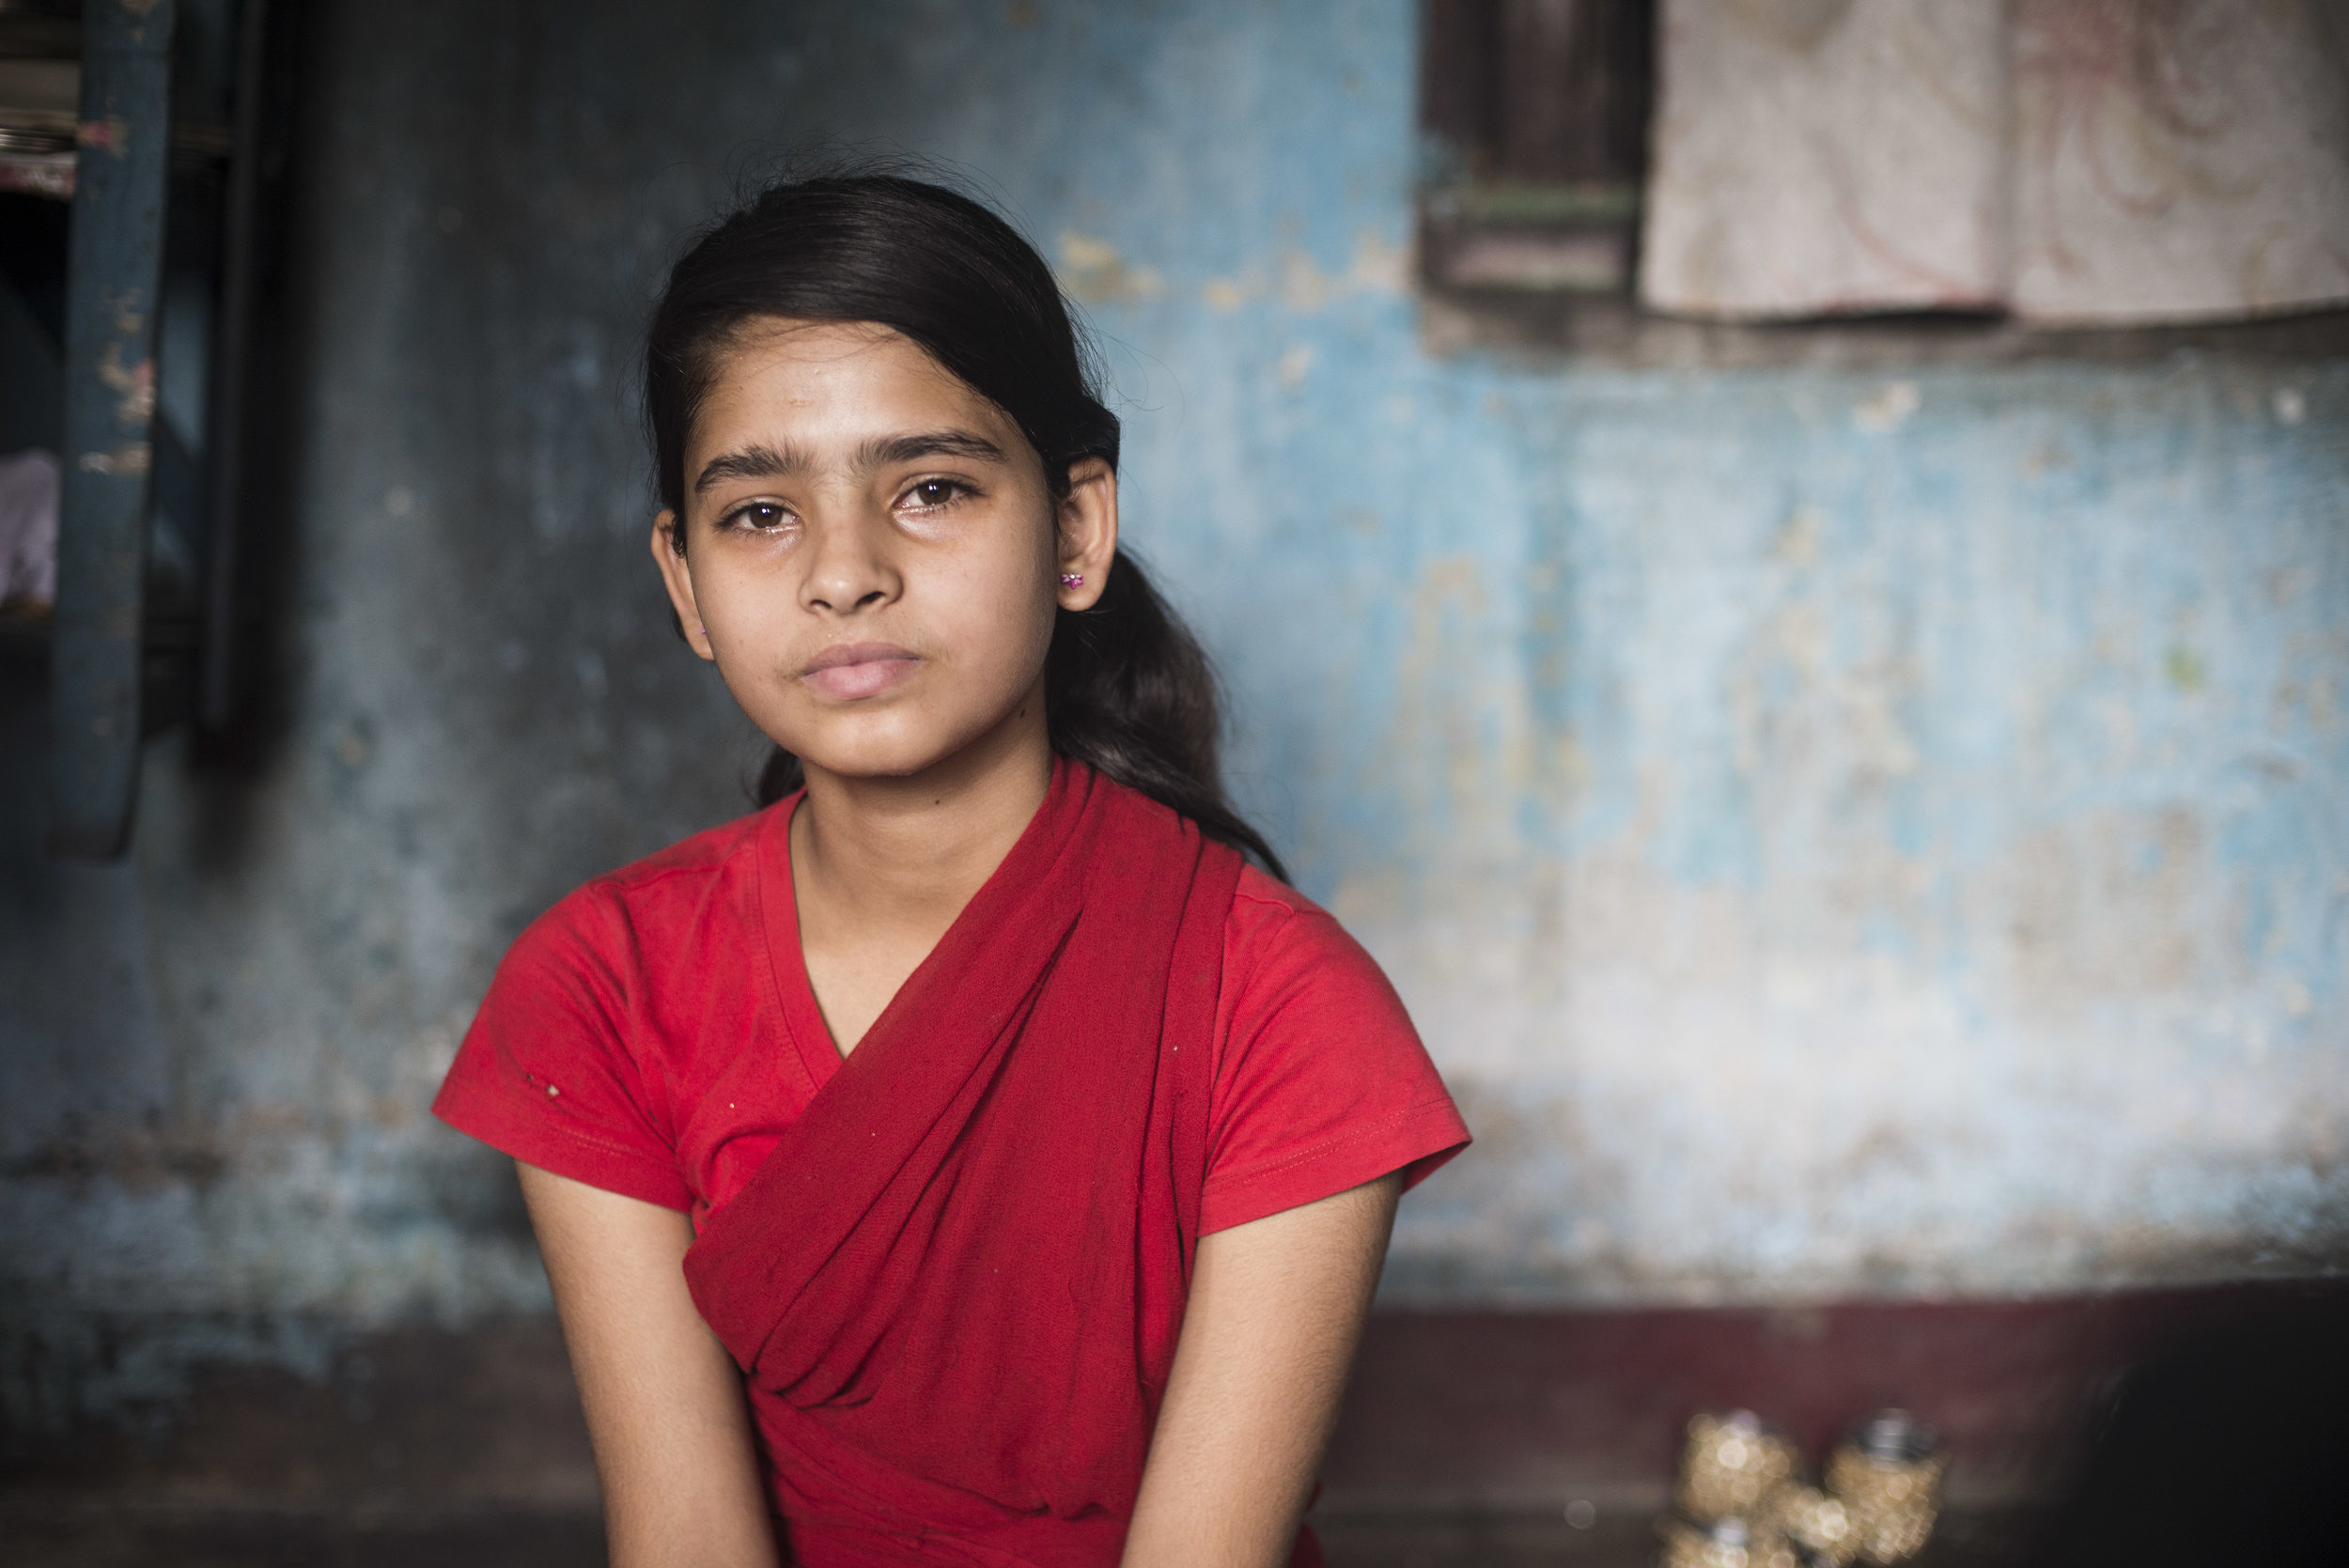  Child Protection program in bangle making village. Kolkata, India. 2015. 